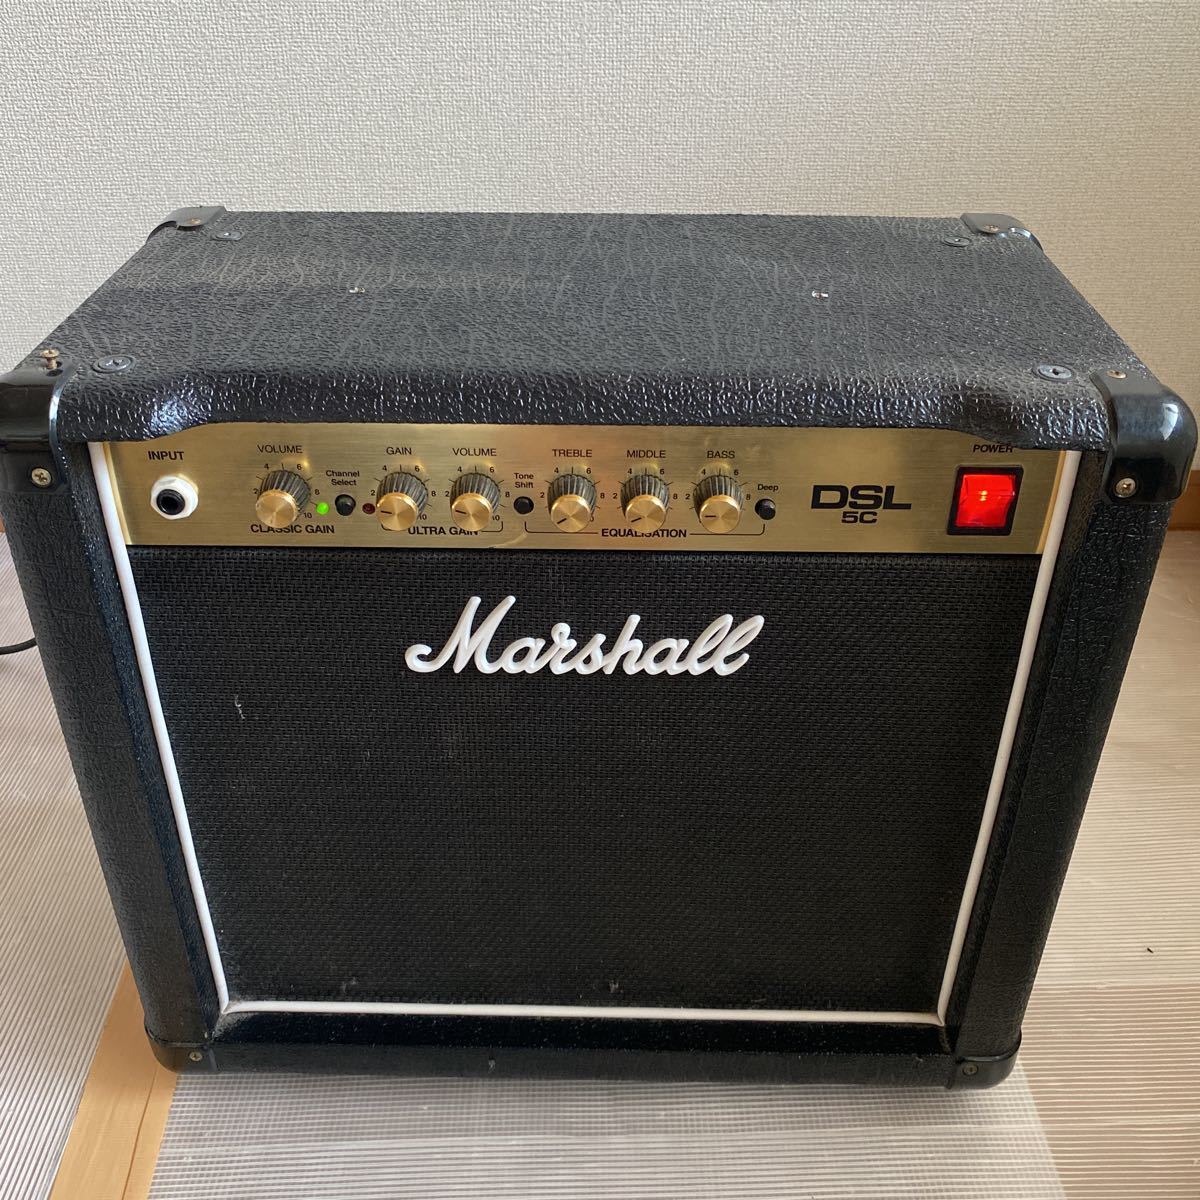 Marshall マーシャル DSL5C 真空管 ギターアンプ(真空管)｜売買された 